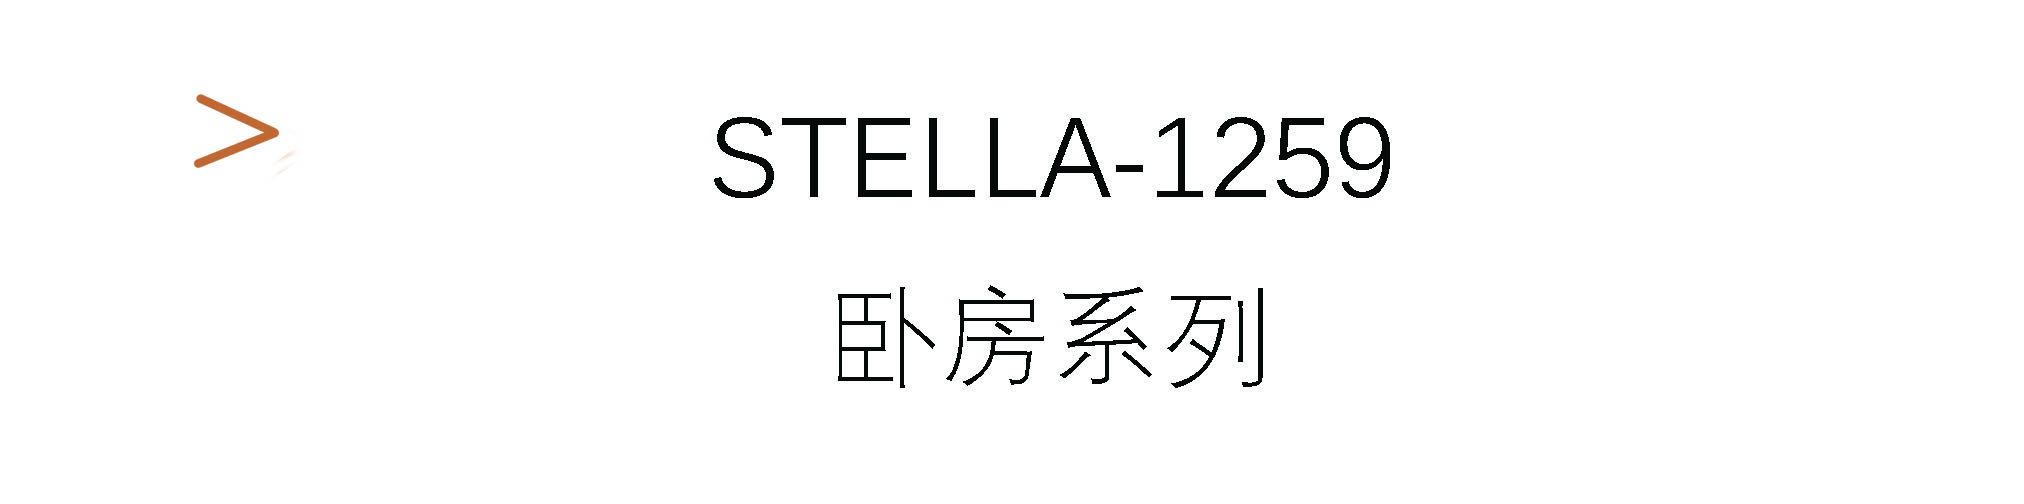 Stella-1259